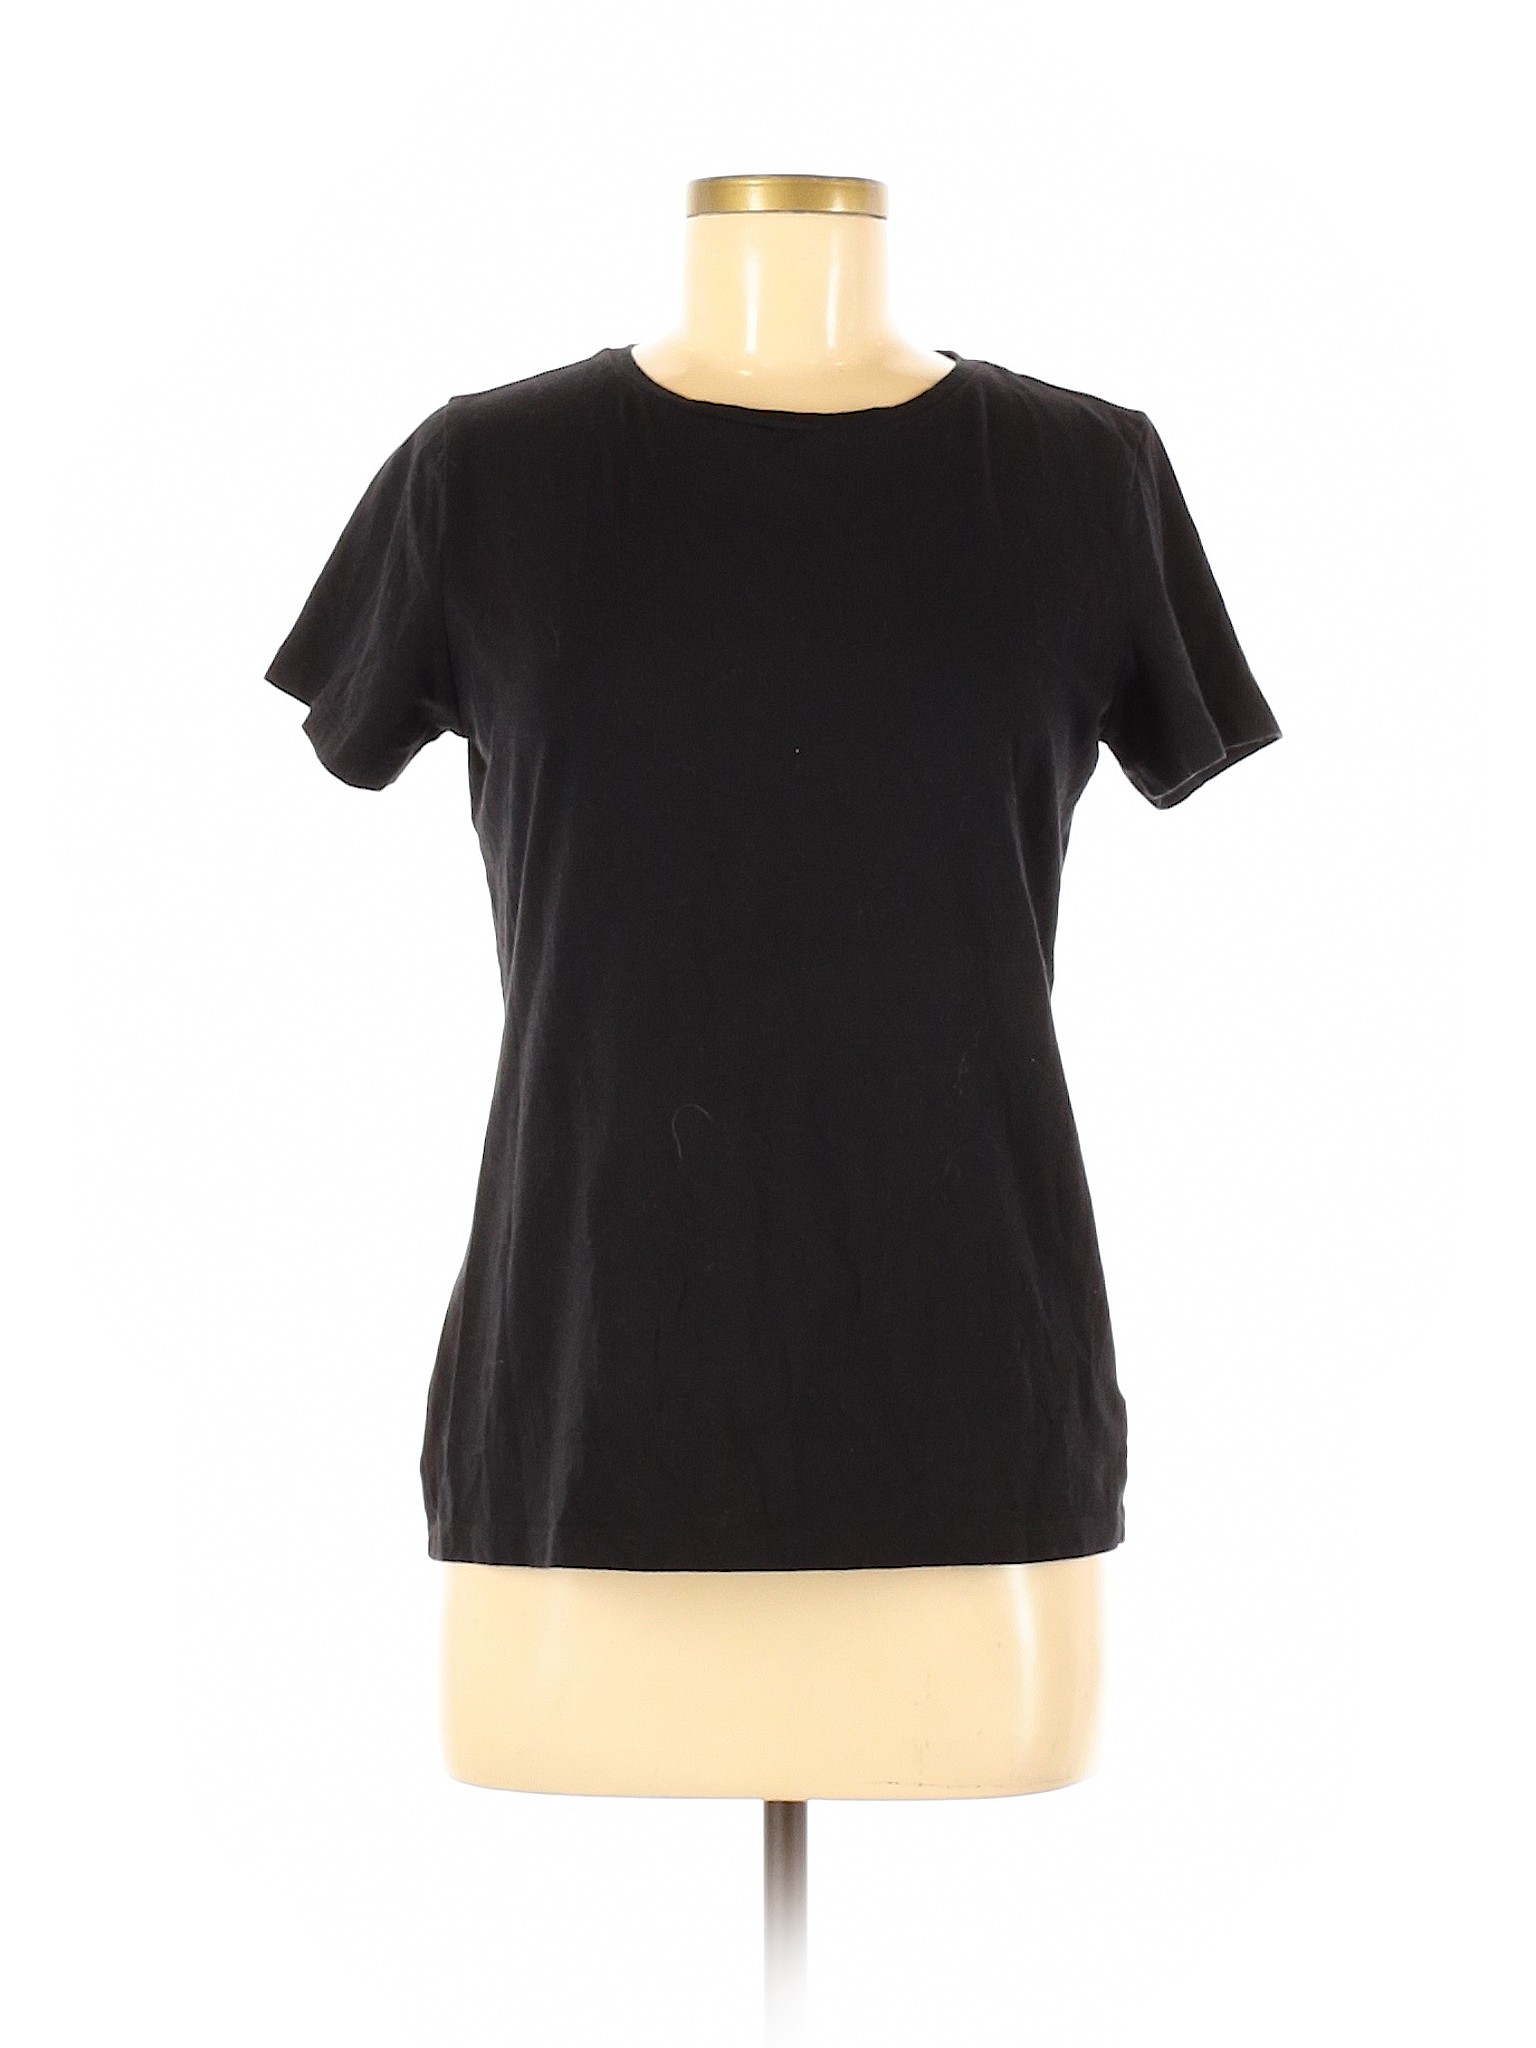 Jones New York Women Black Short Sleeve T-Shirt M | eBay